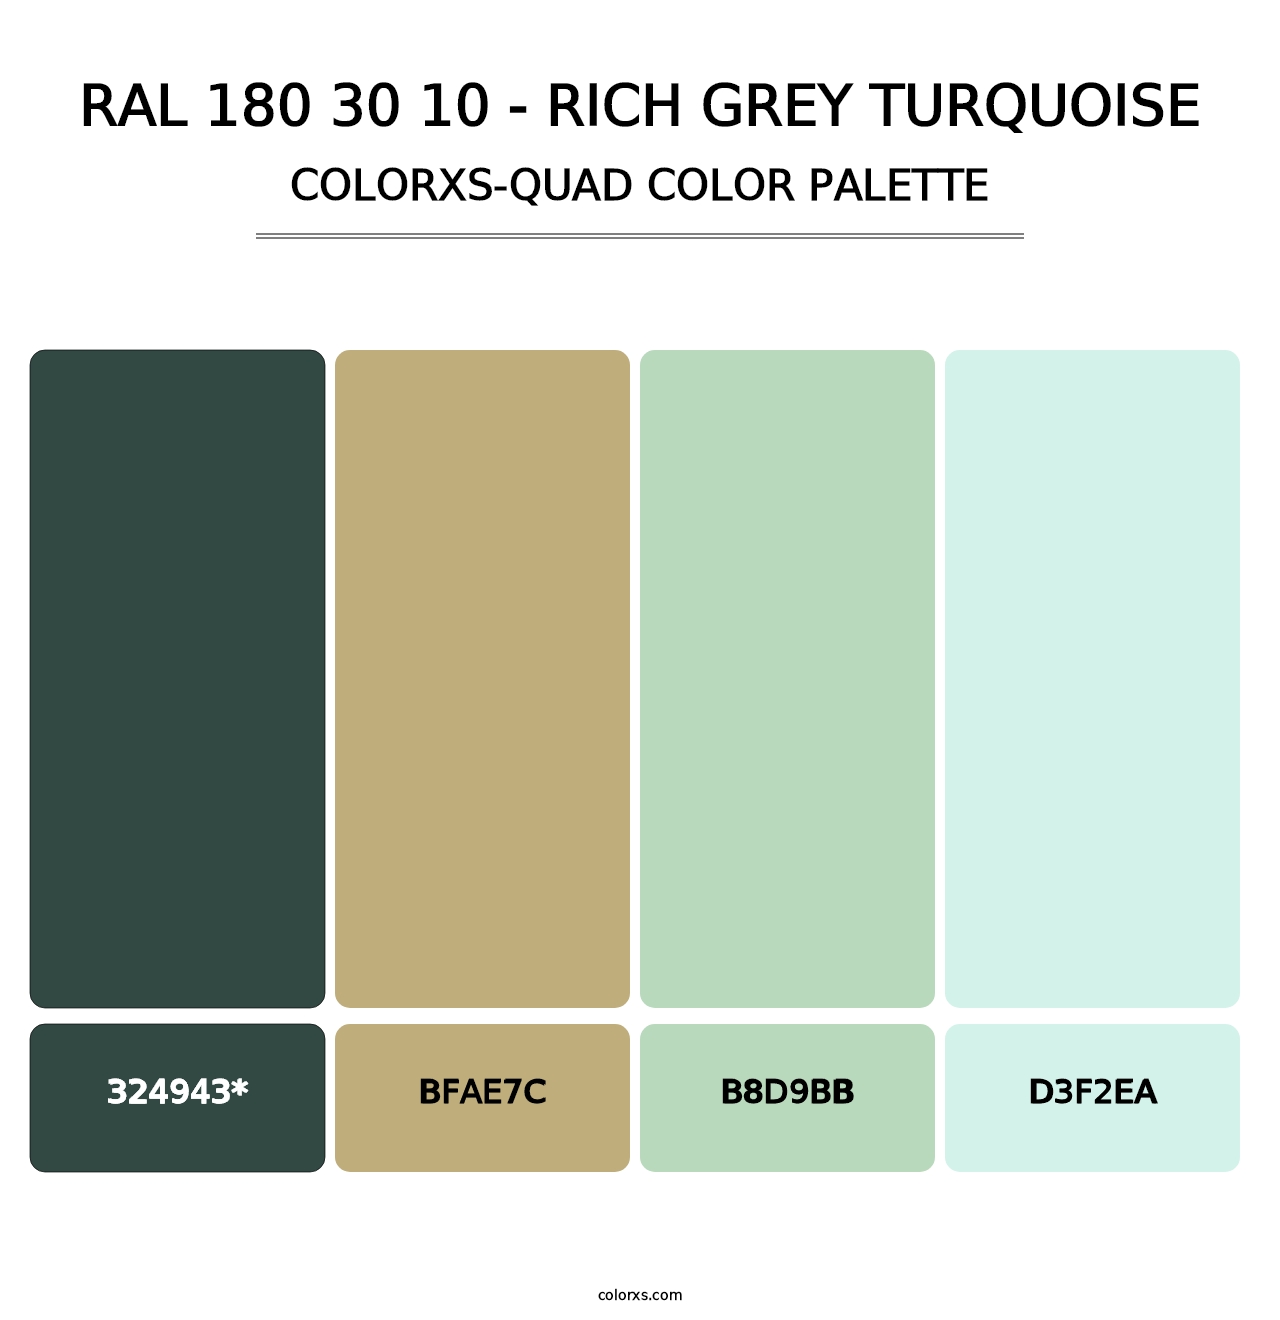 RAL 180 30 10 - Rich Grey Turquoise - Colorxs Quad Palette